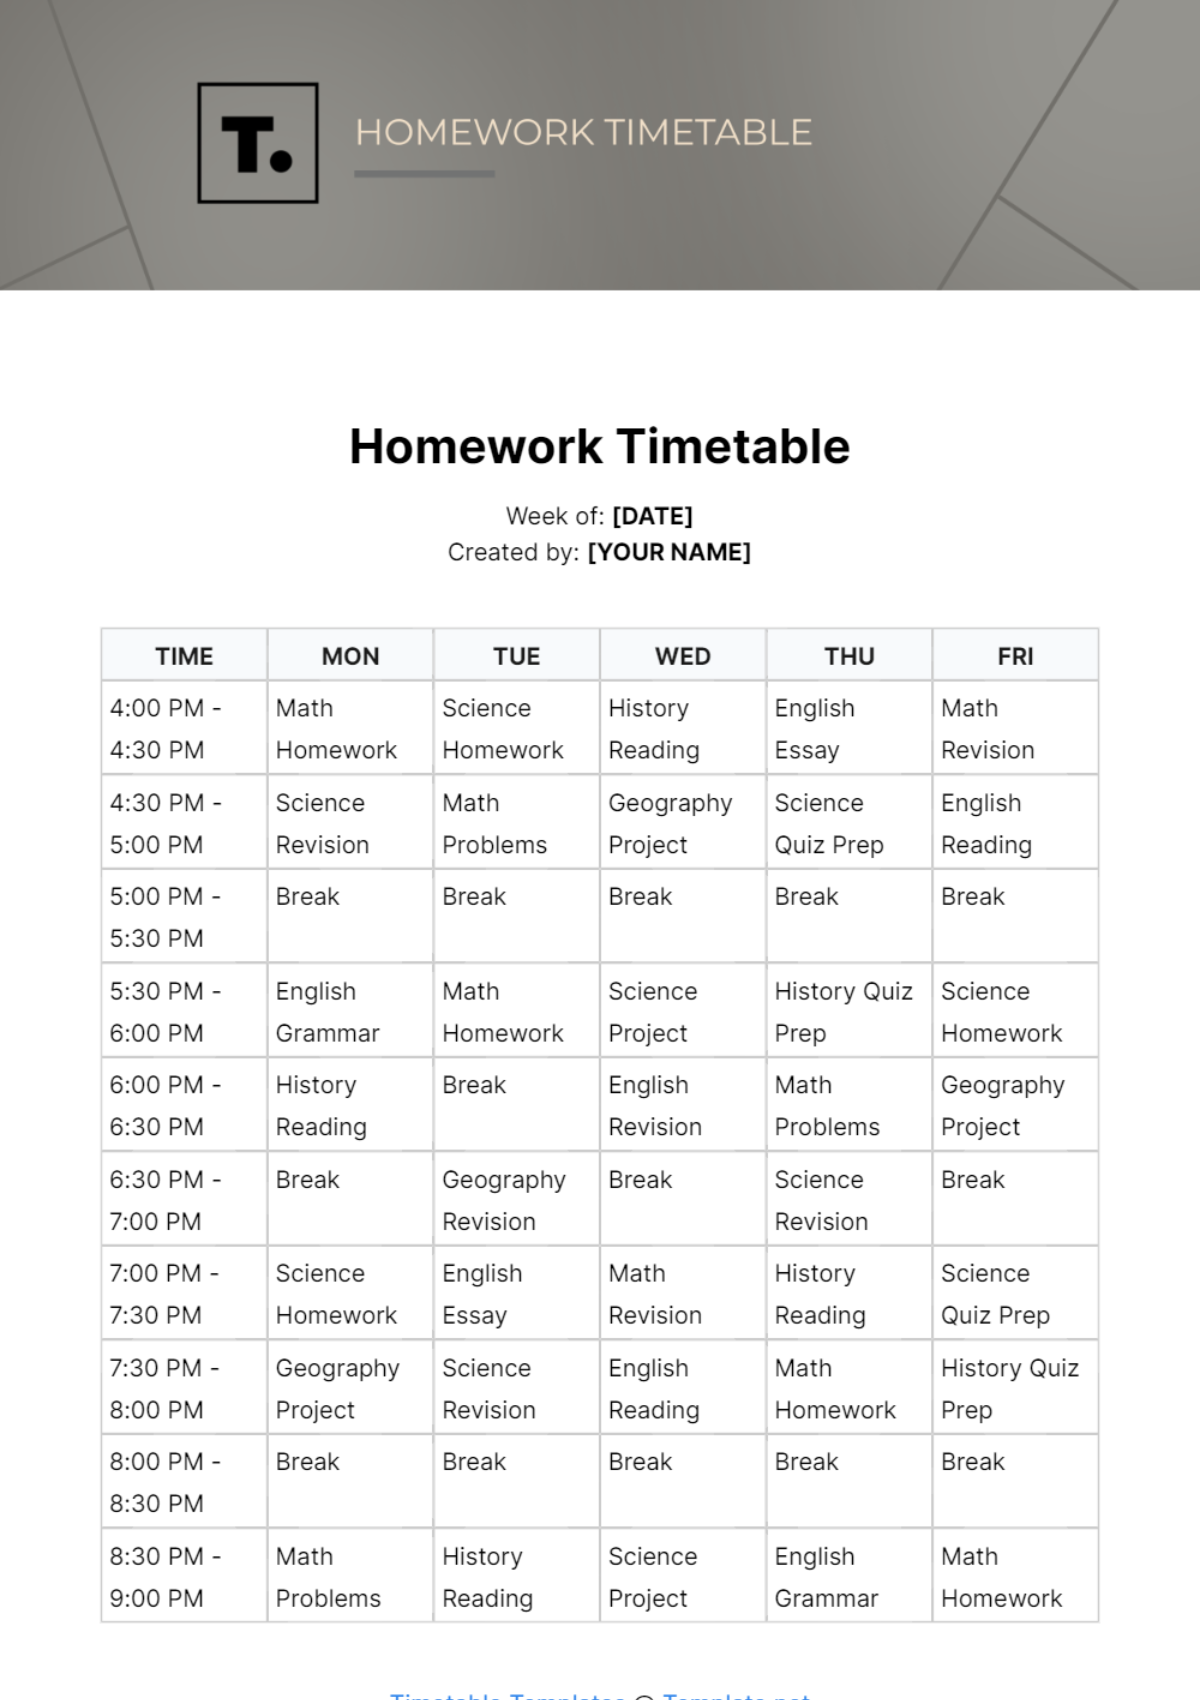 Free Homework Timetable Template